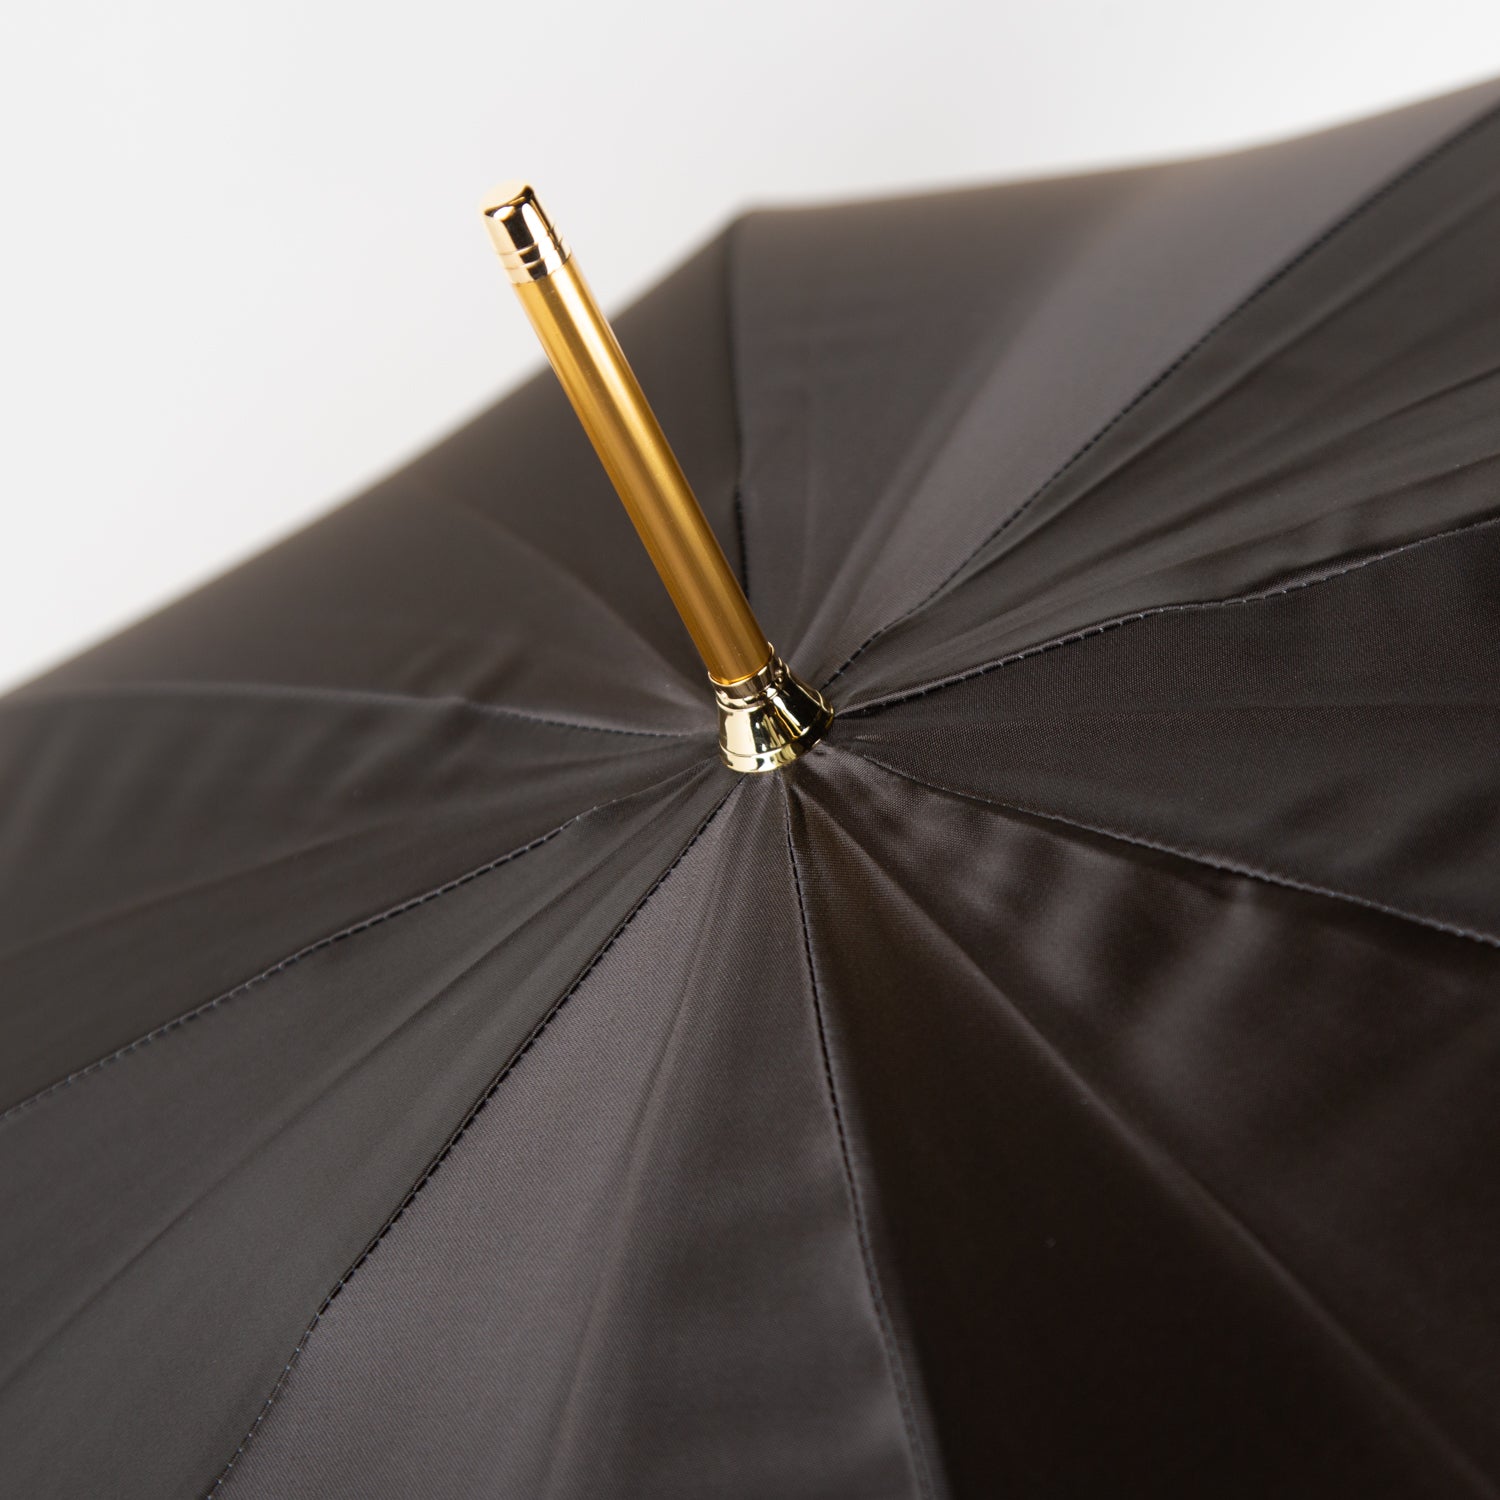 Ivory & Striped Interior Umbrella - Secret Location